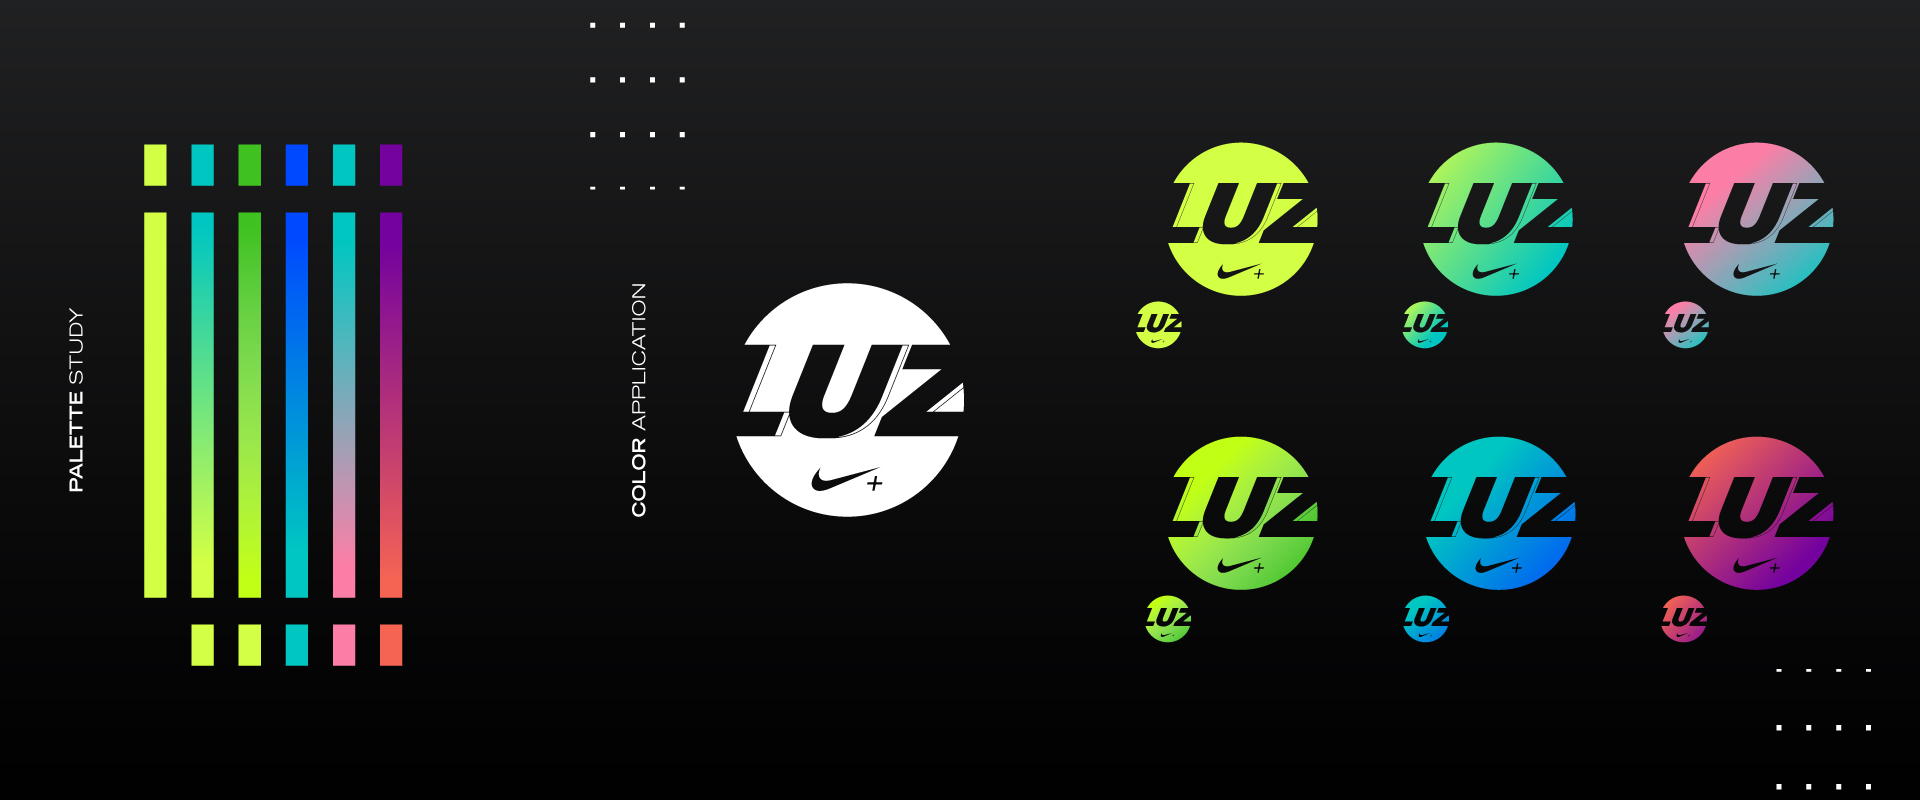 LUZ logo color study